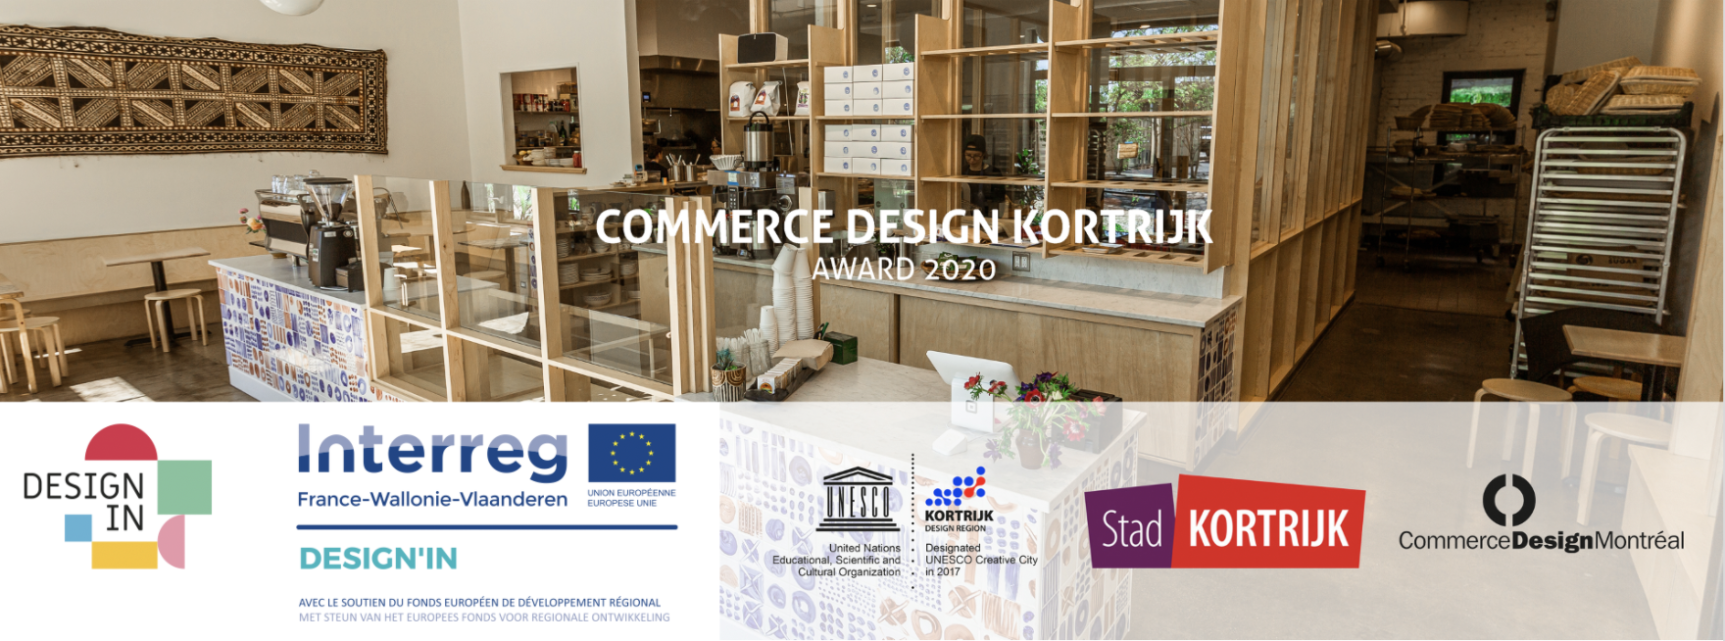 OPEN CALL Commerce Design Kortrijk Award 2020